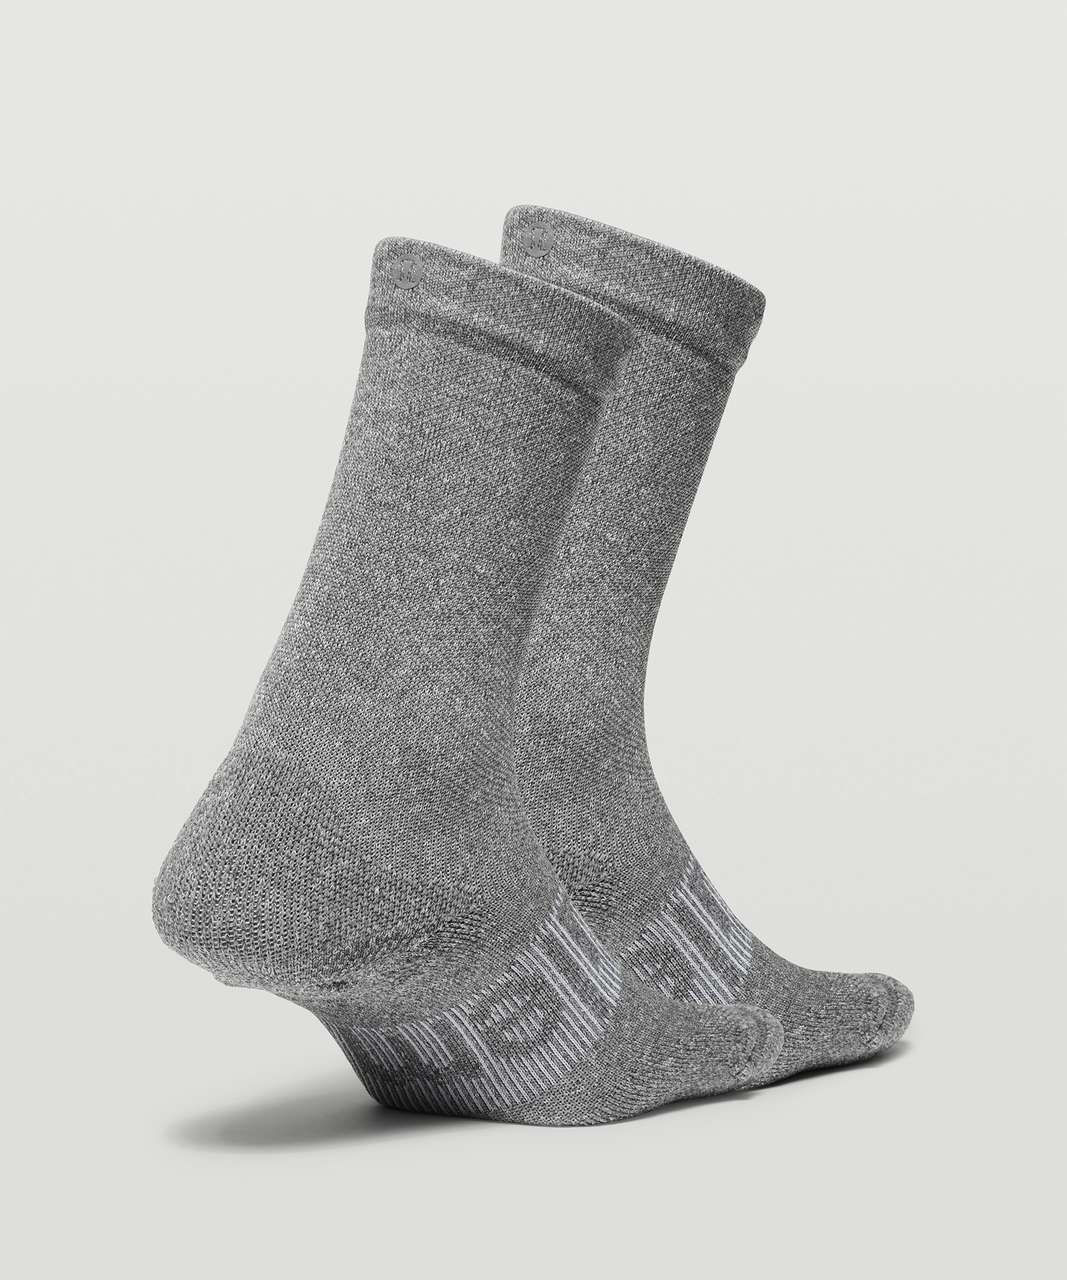 Lululemon Power Stride Crew Sock *2 Pack - Heathered Graphite Grey